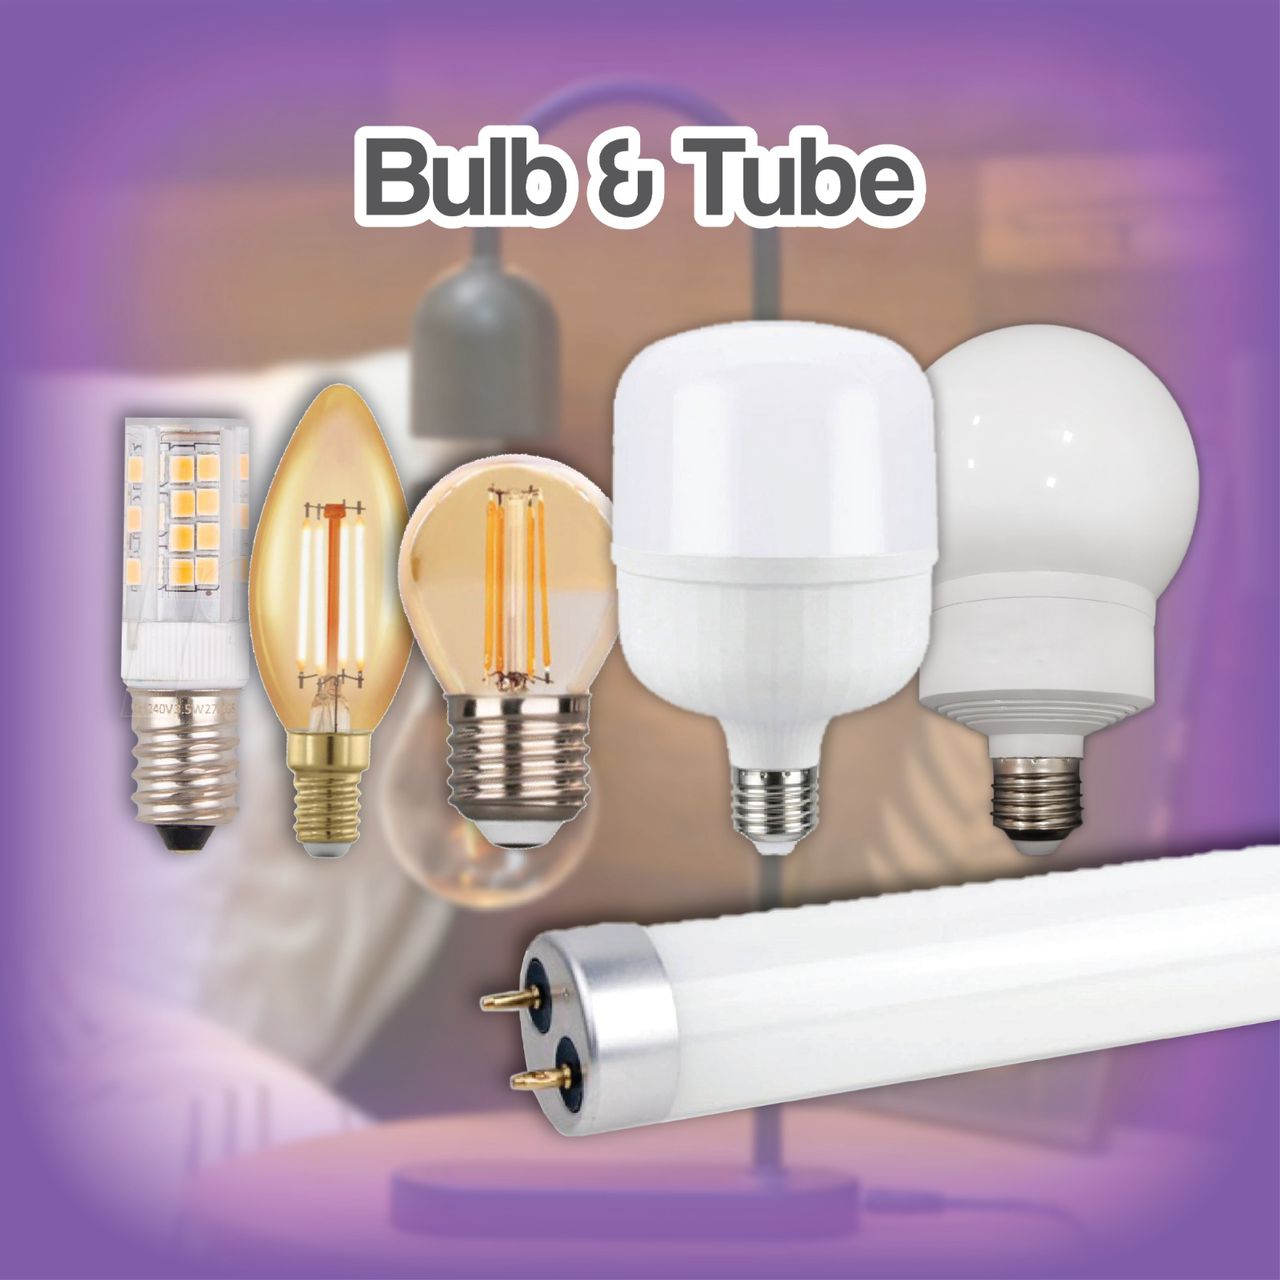 Bulb & Tube